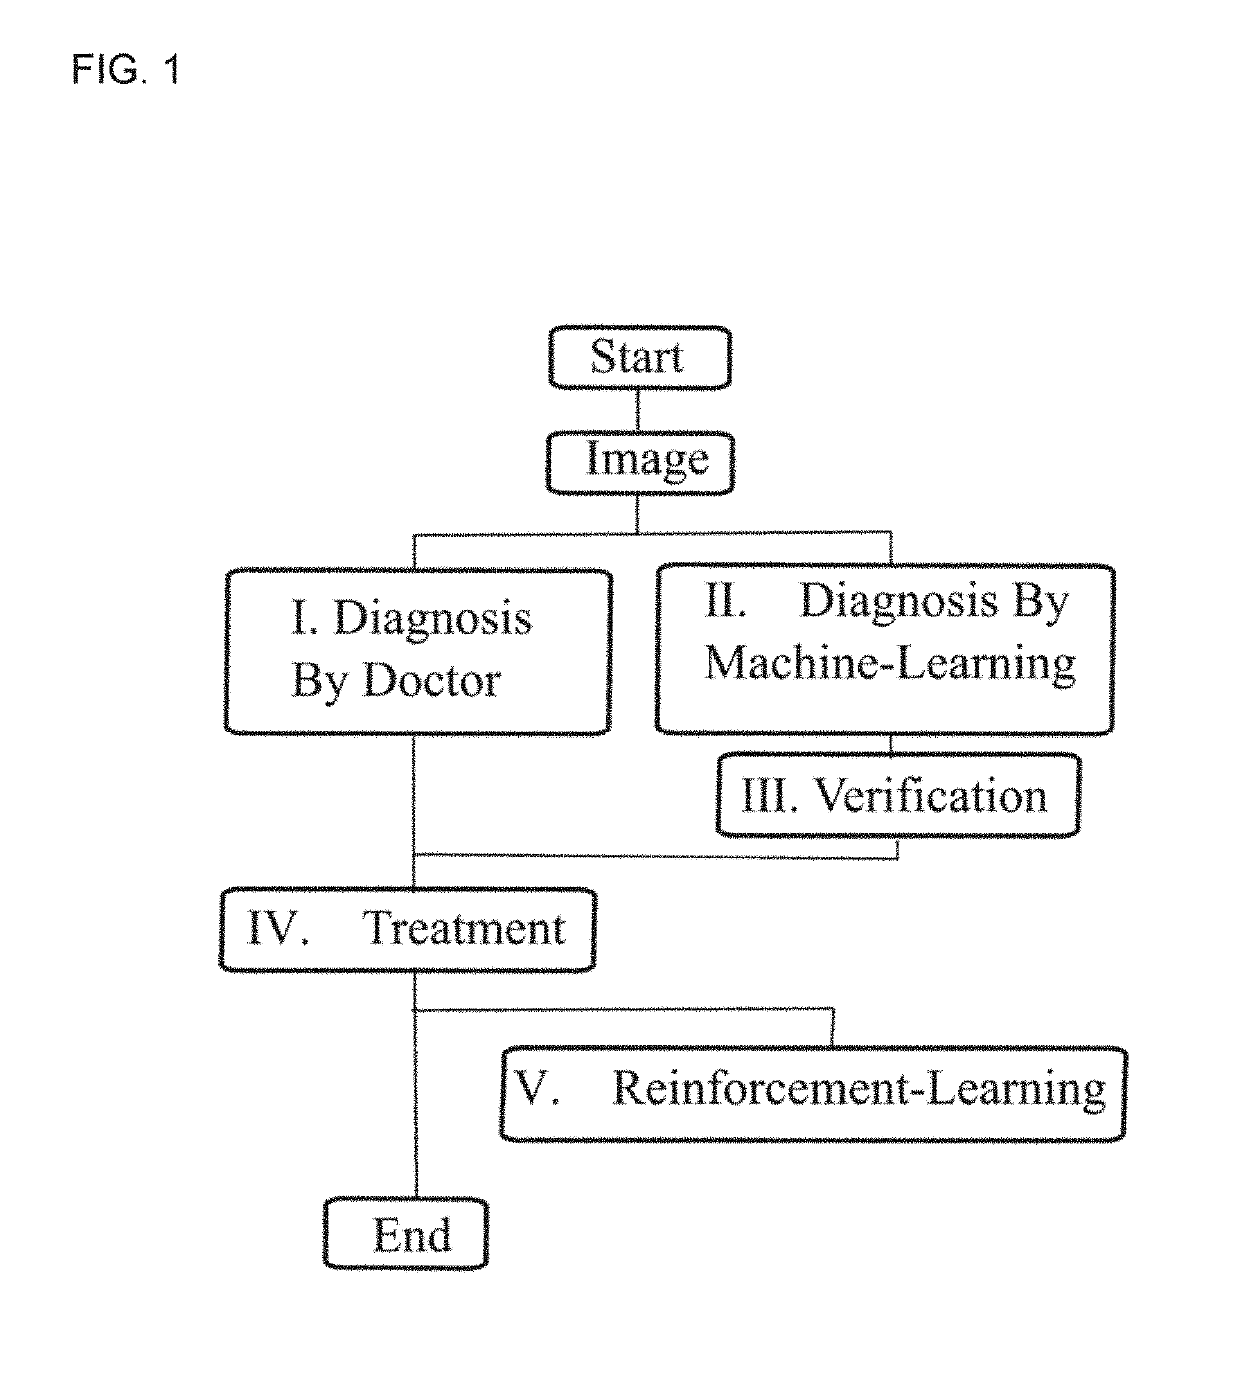 Diagnostic Method, Method for Validation of Diagnostic Method, and Treatment Method